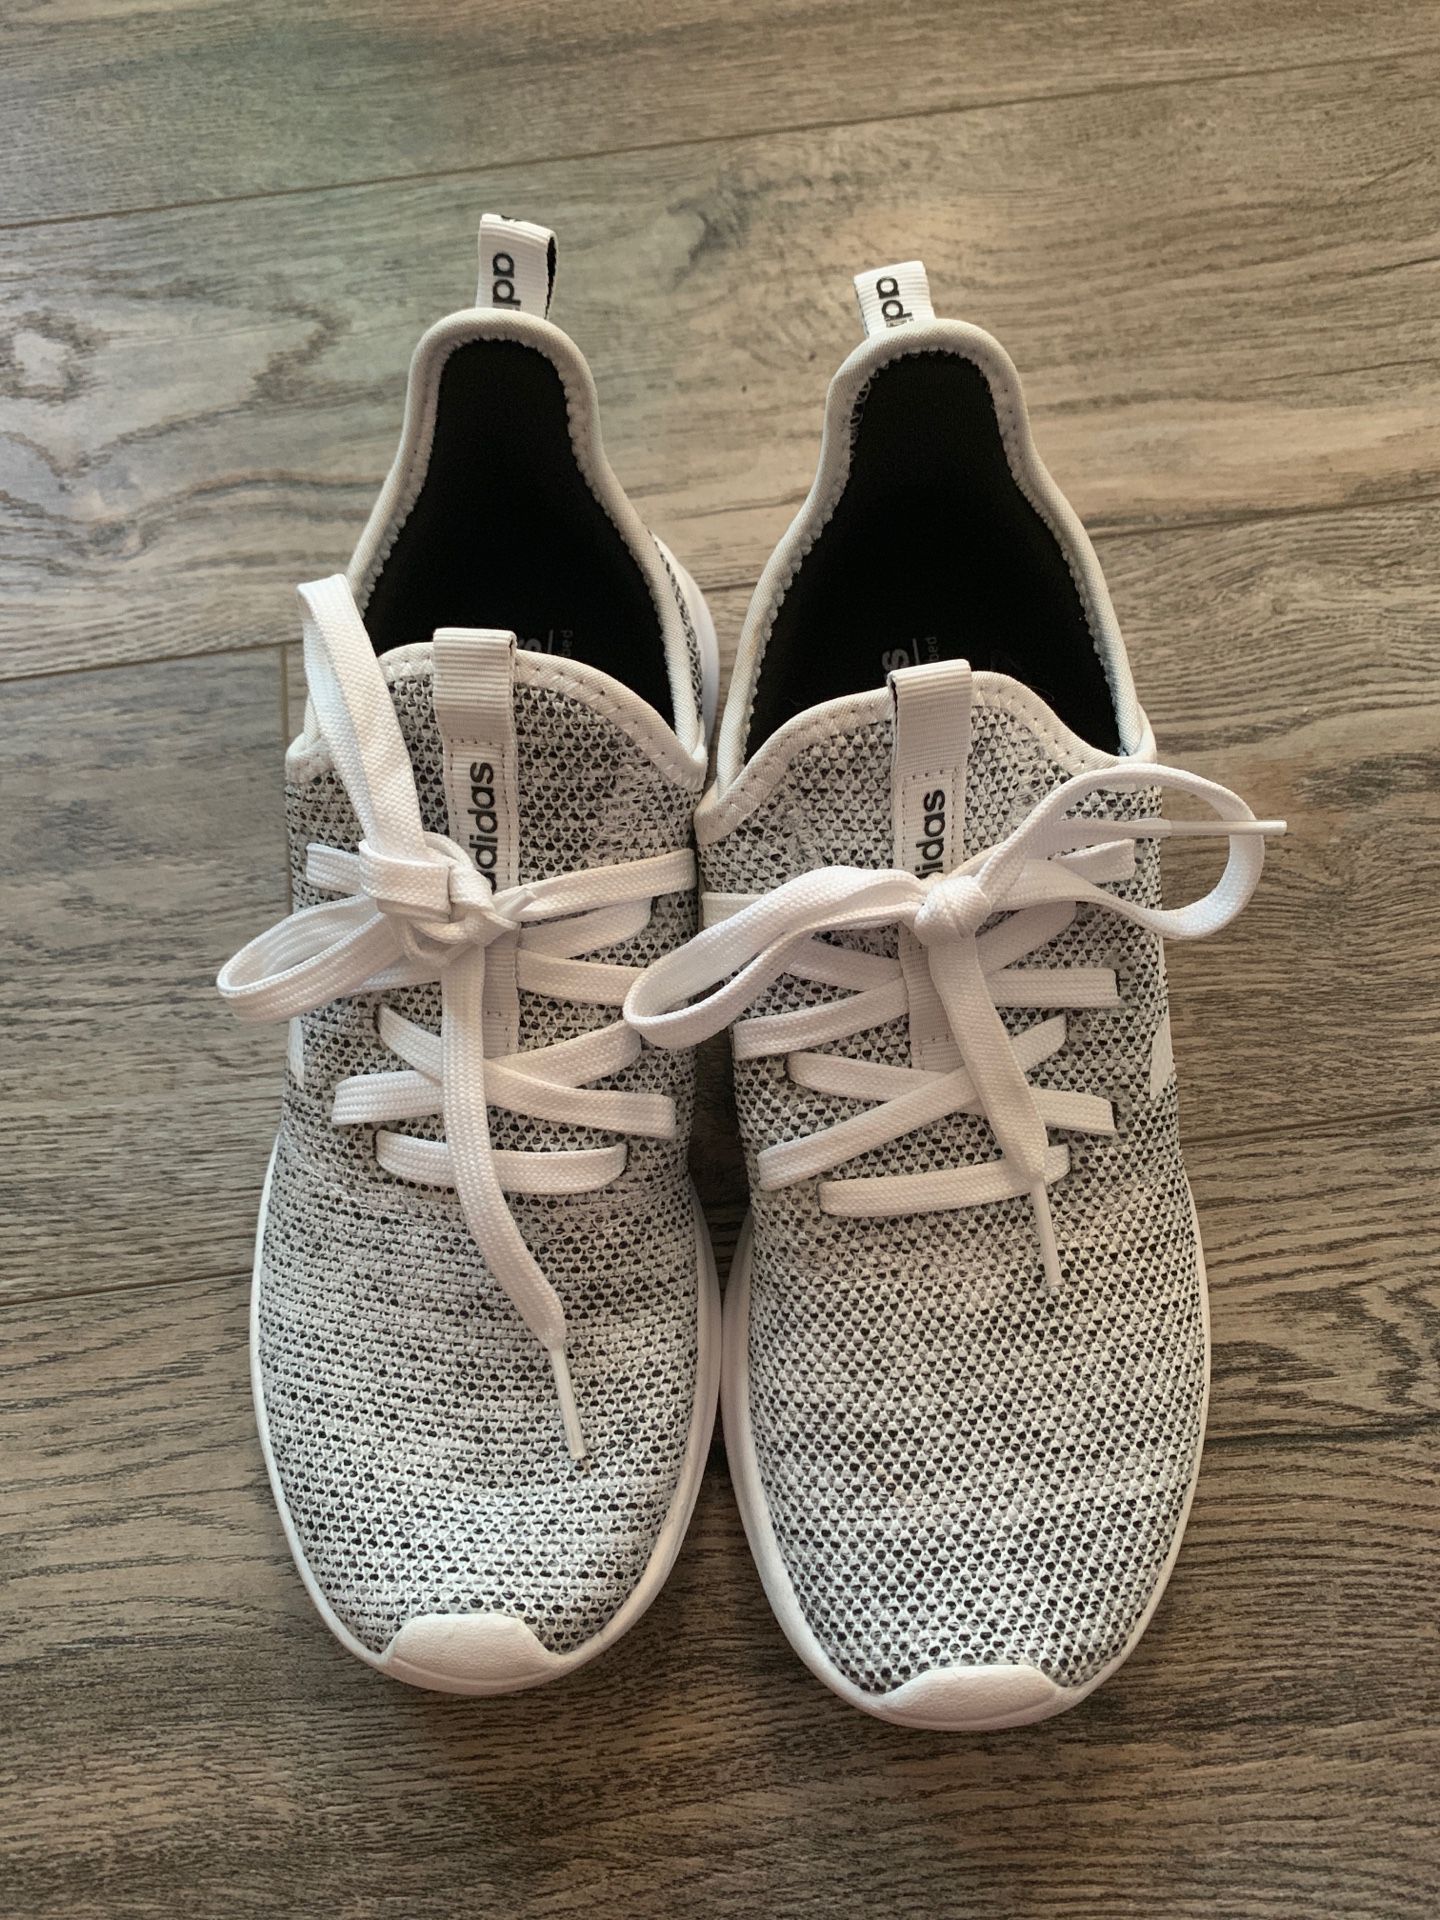 Adidas memory foam shoes